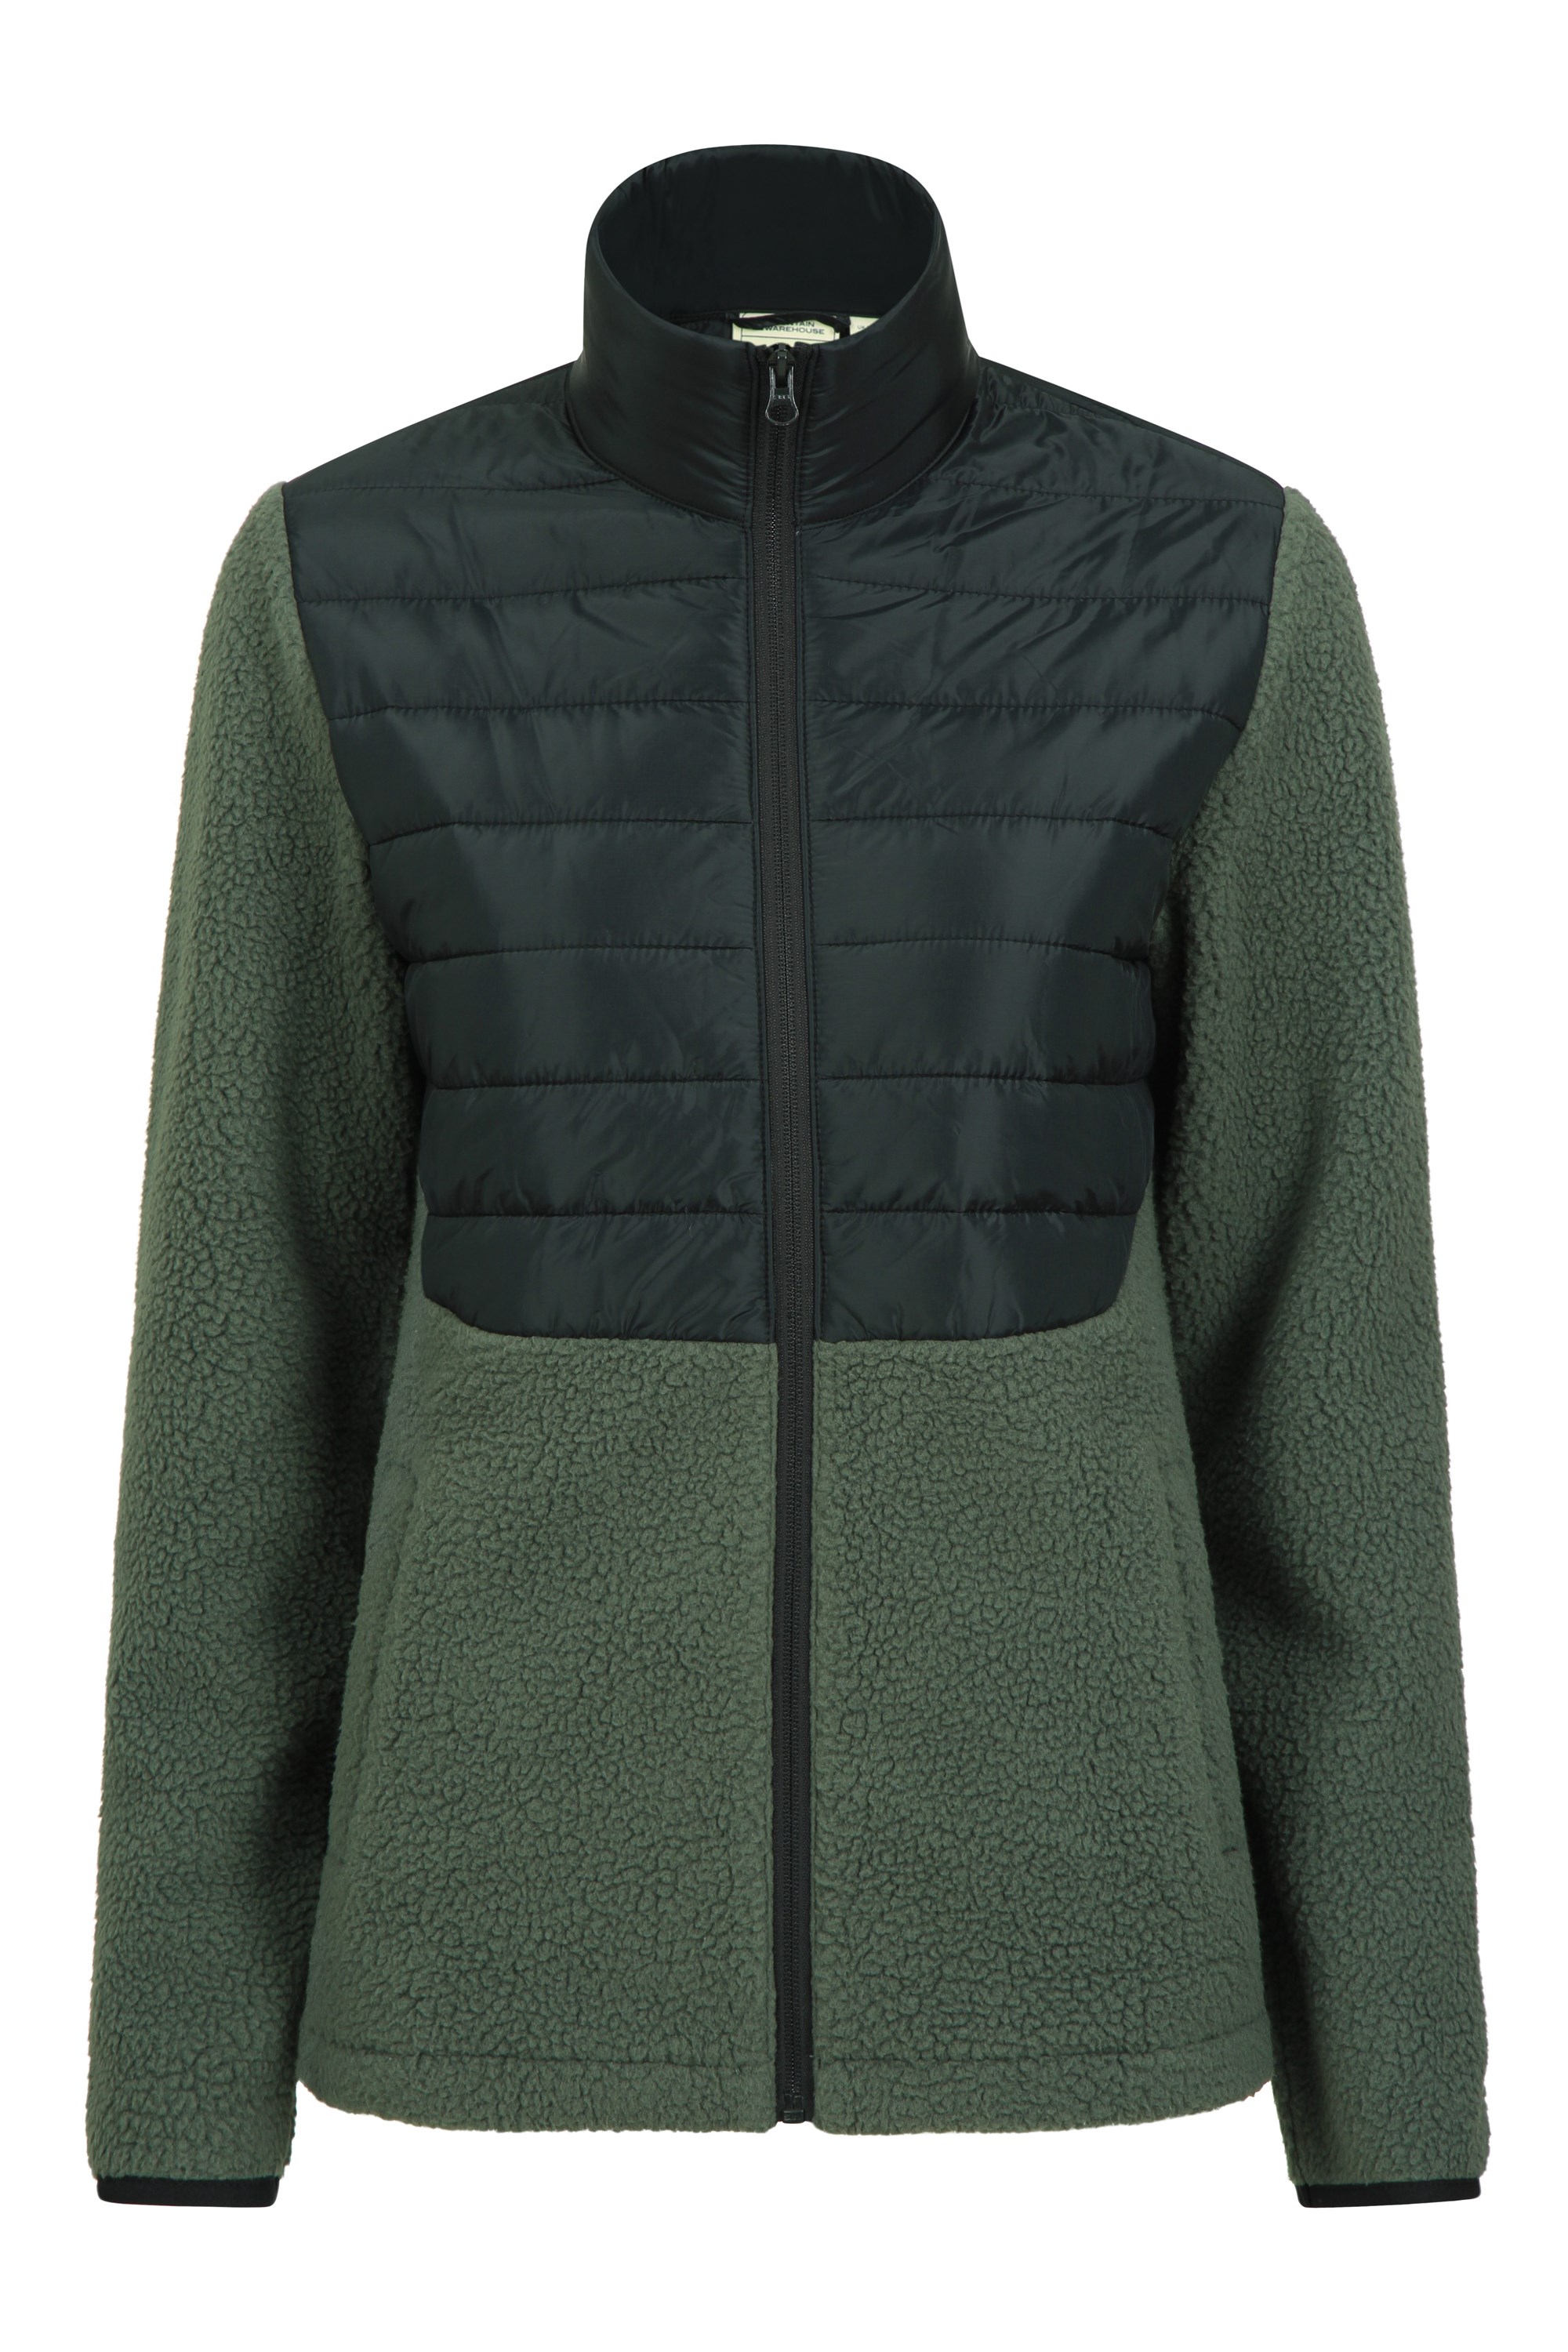 Dale Womens Insulated Fleece Jacket - Green